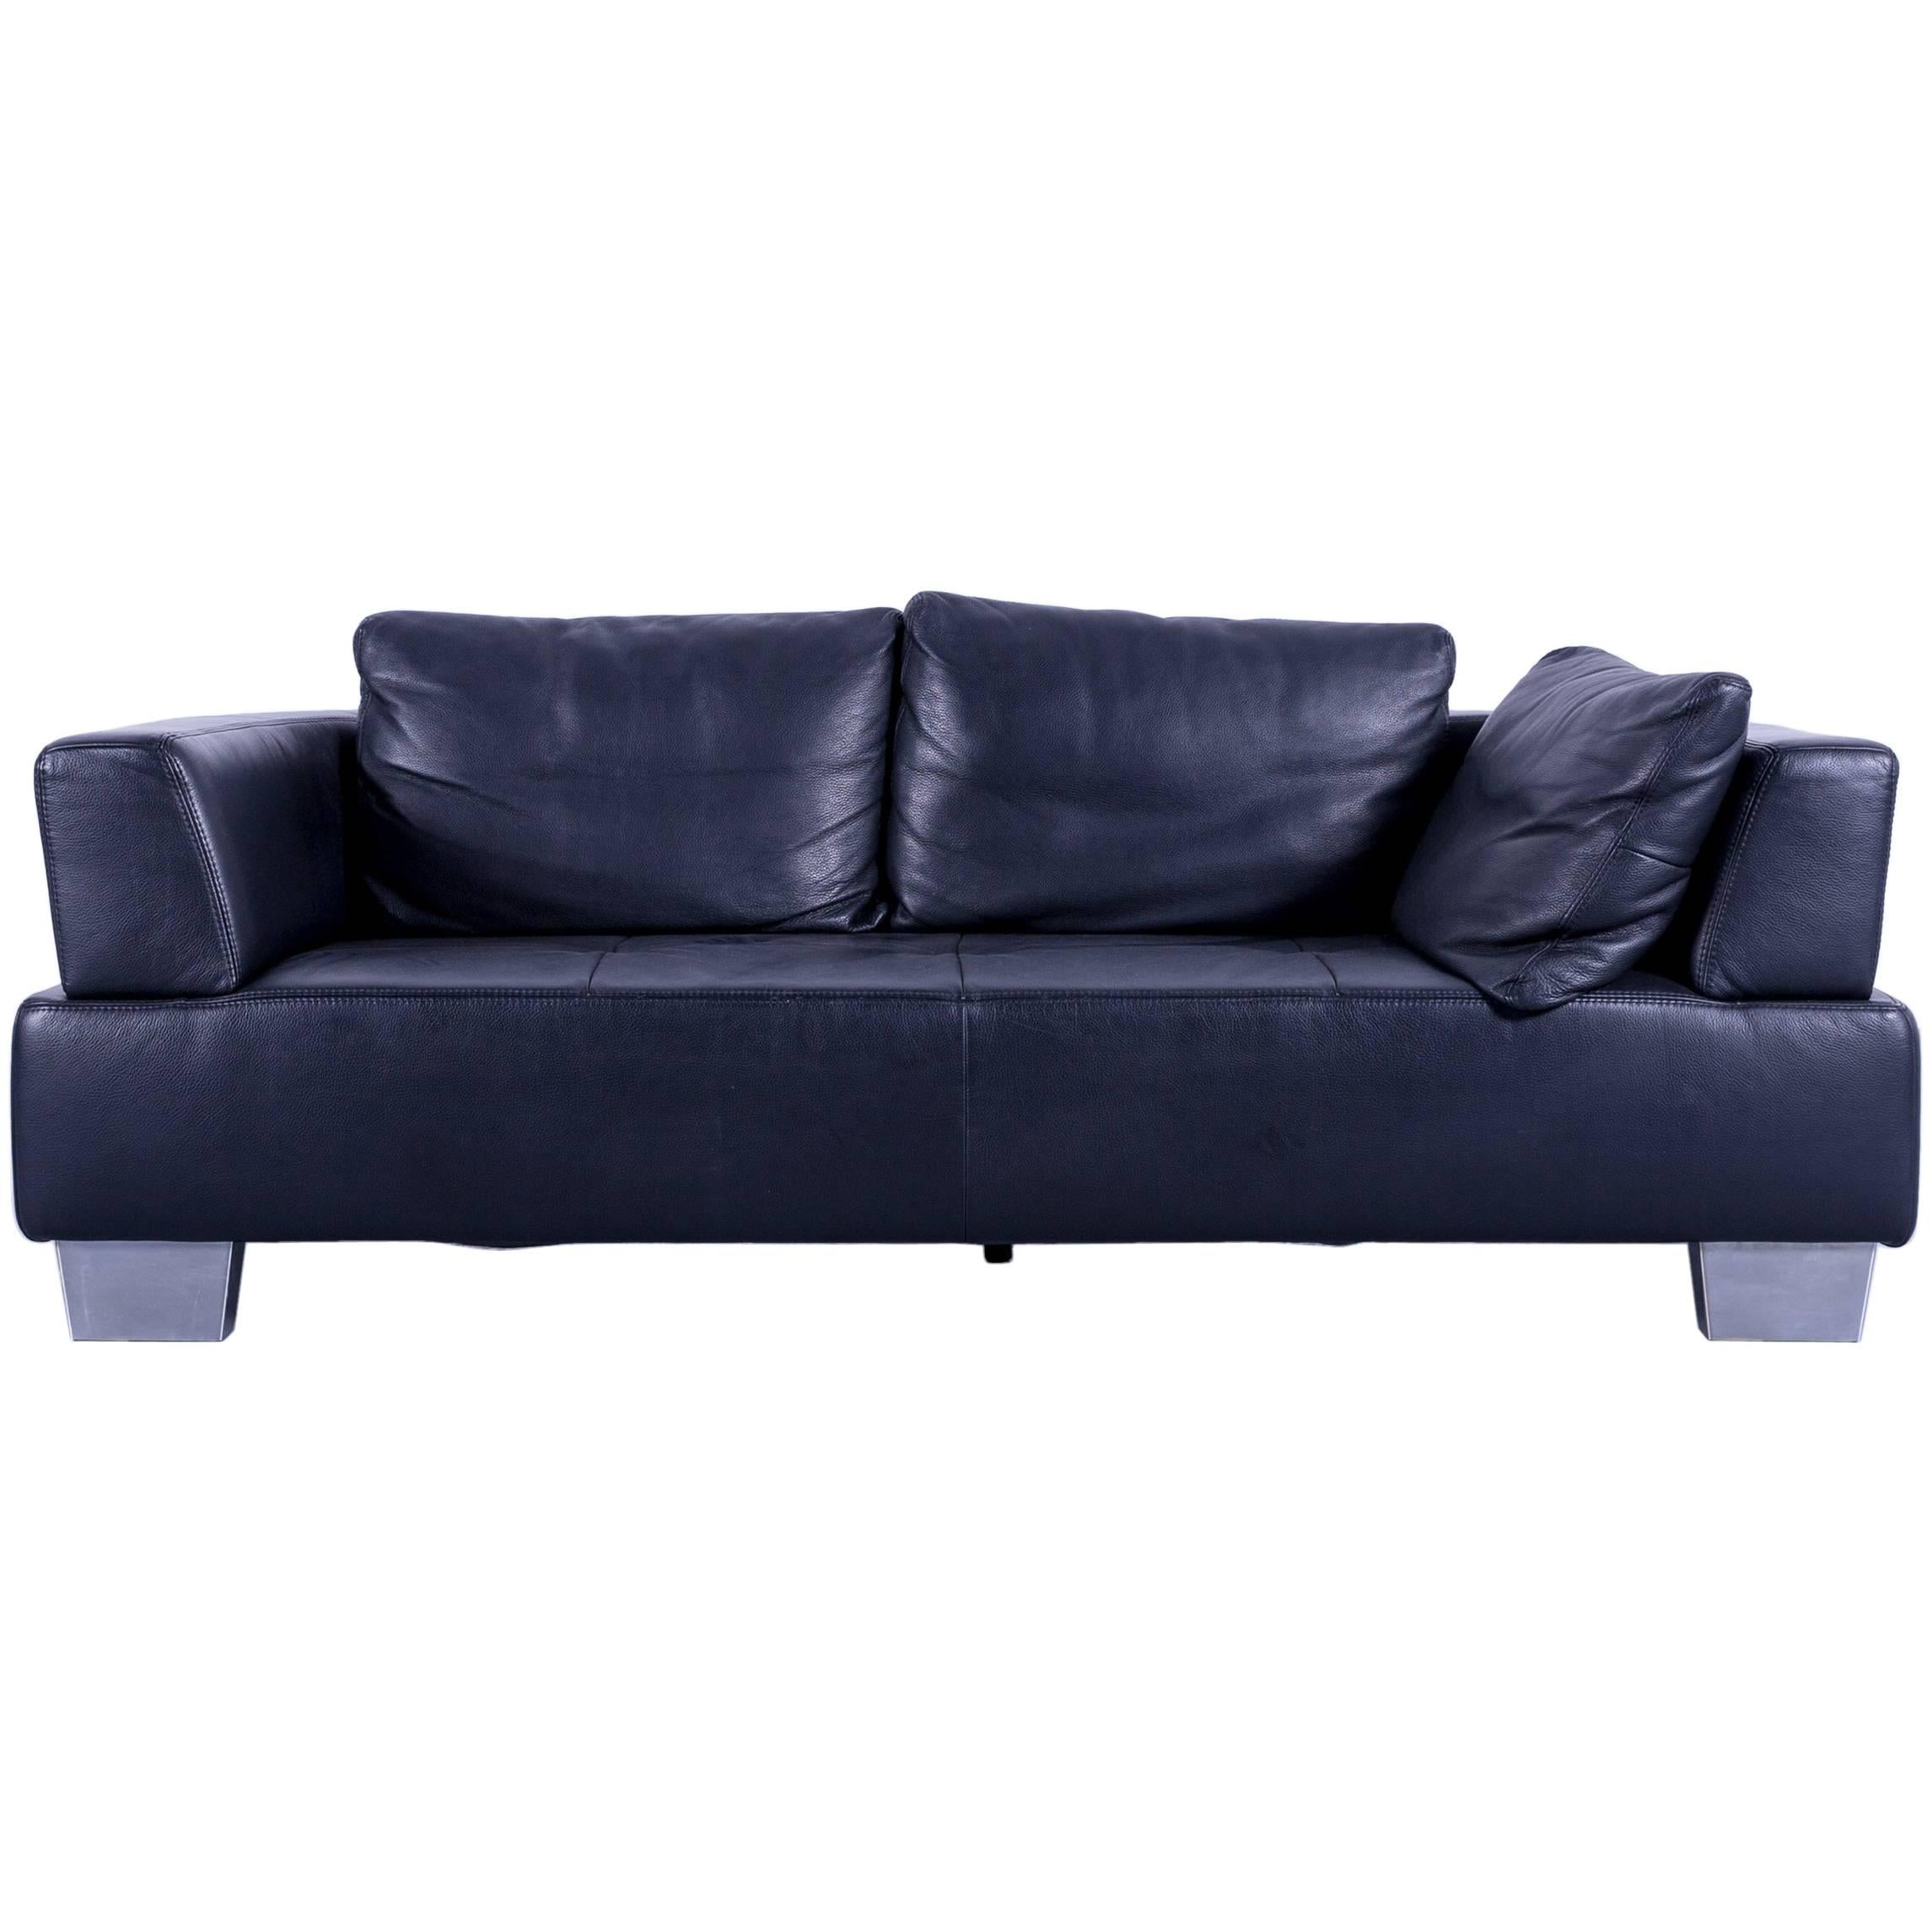 Ewald Schillig Moon Designer Sofa Black Leather Couch Three-Seat Modern